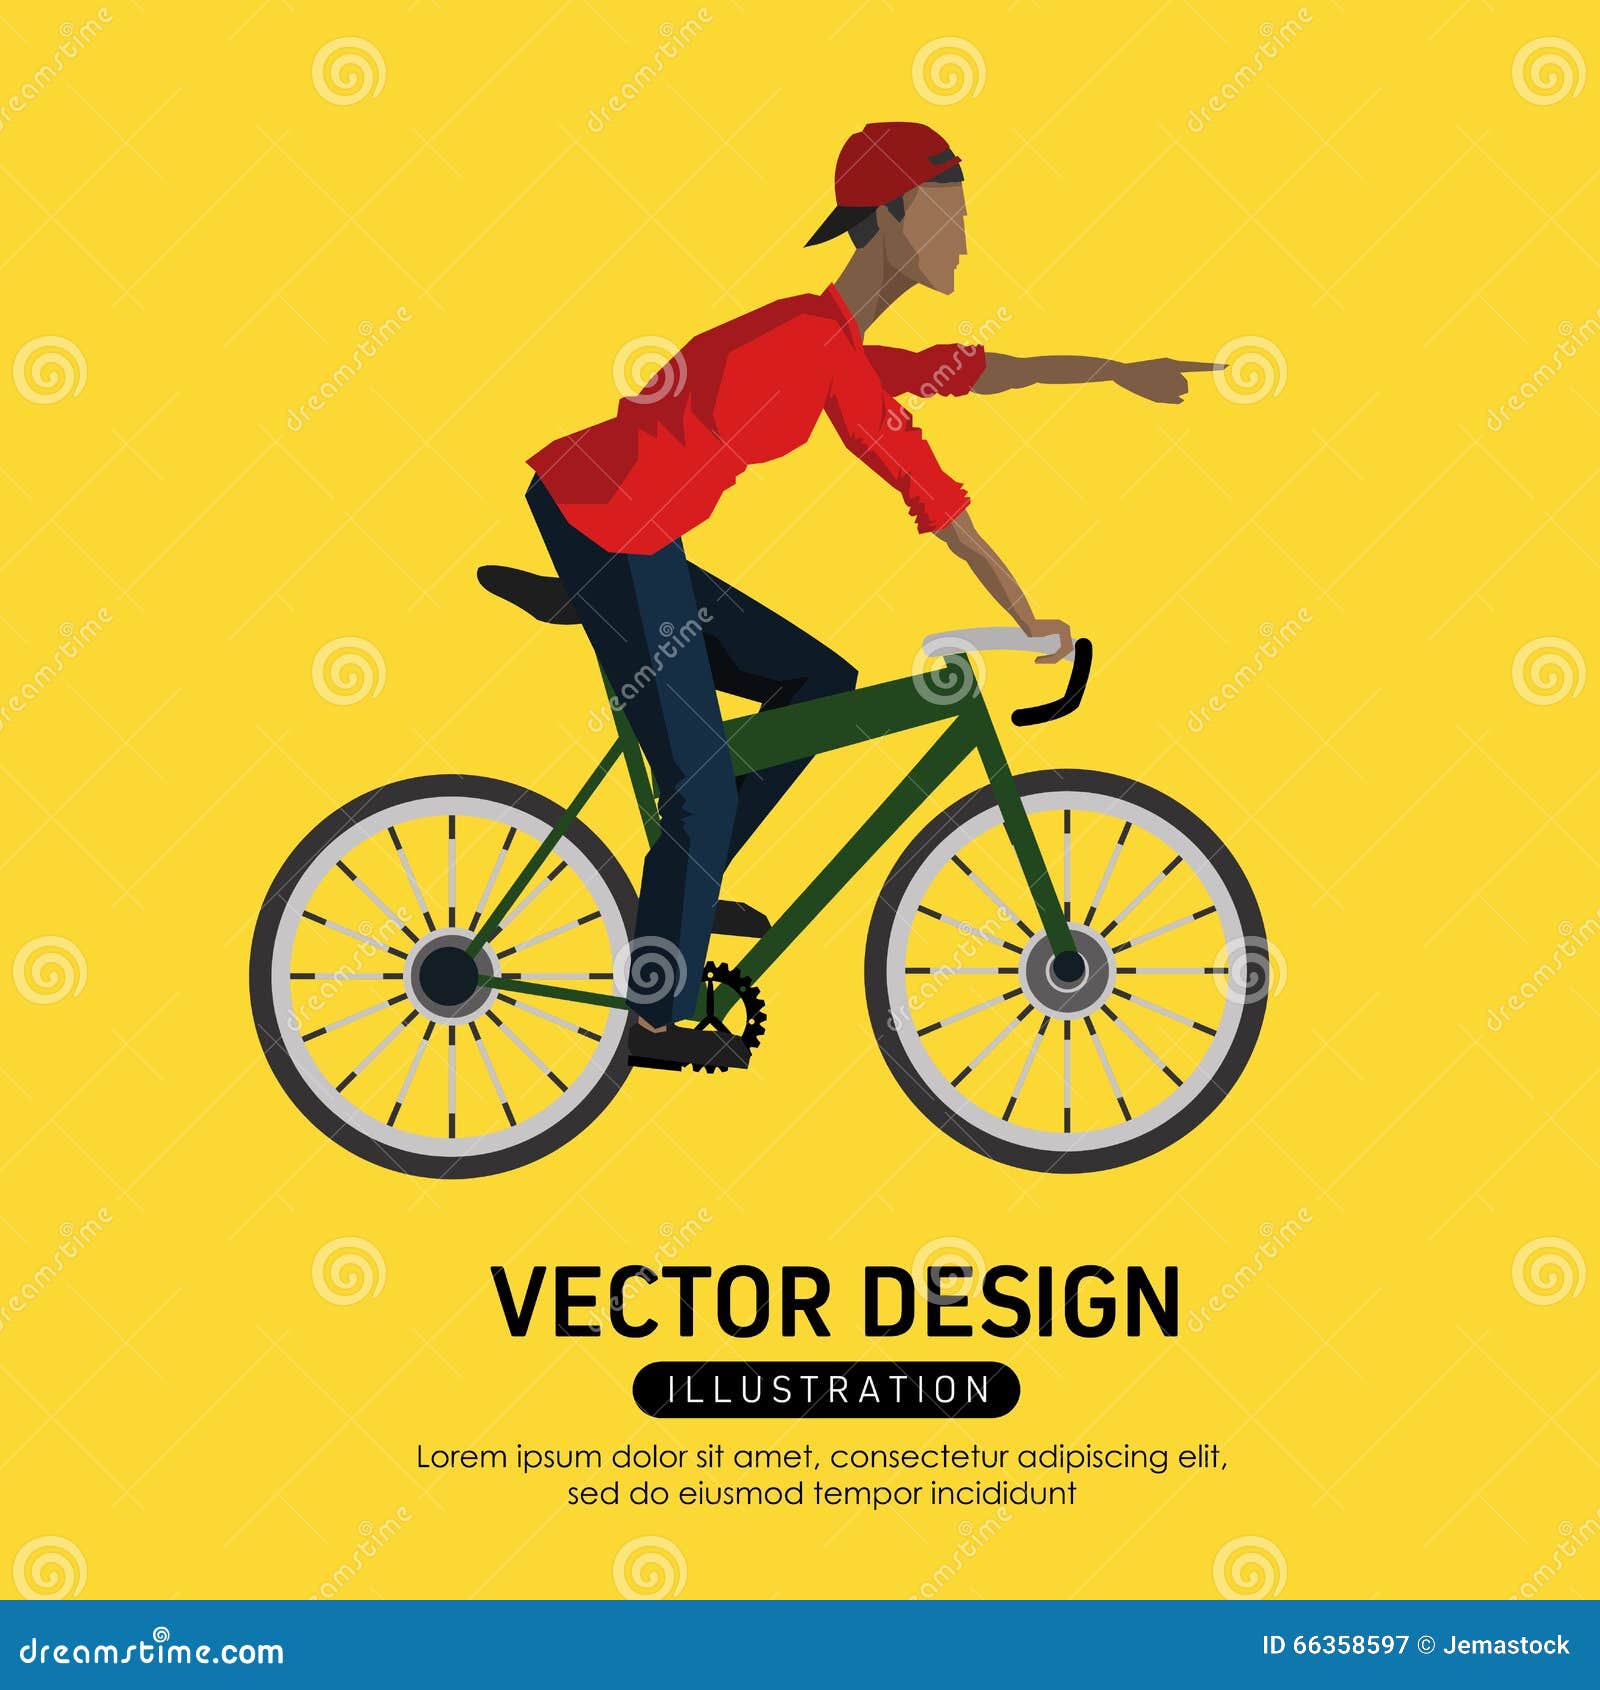 Bike lifestyle design stock vector. Illustration of healthy - 66358597